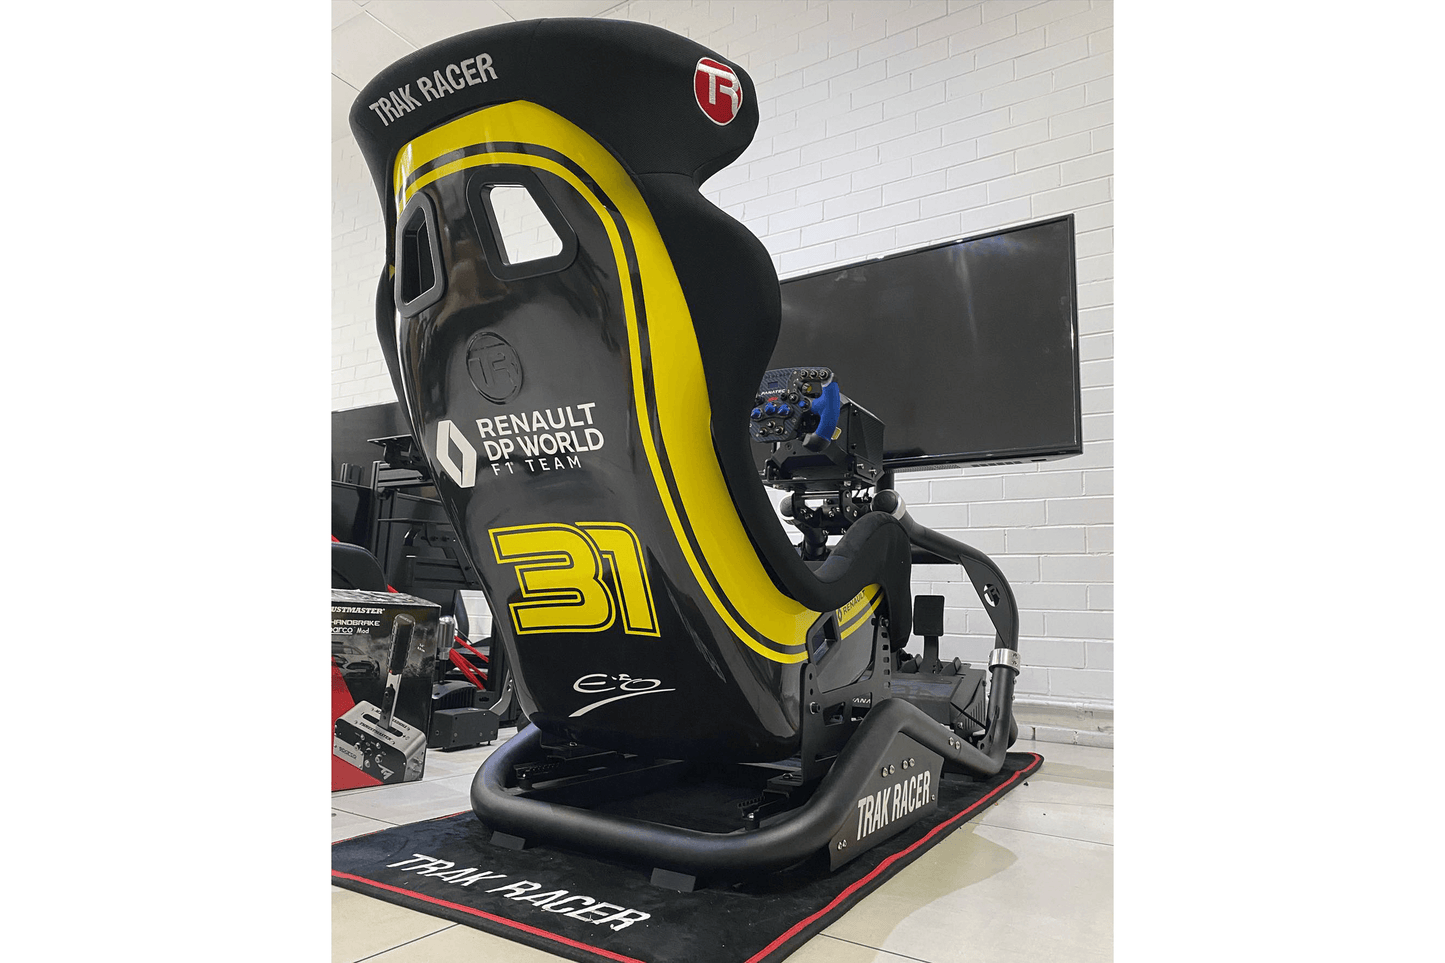 Trak Racer Oversized Seat Bracket for GT/Formula Seating Position